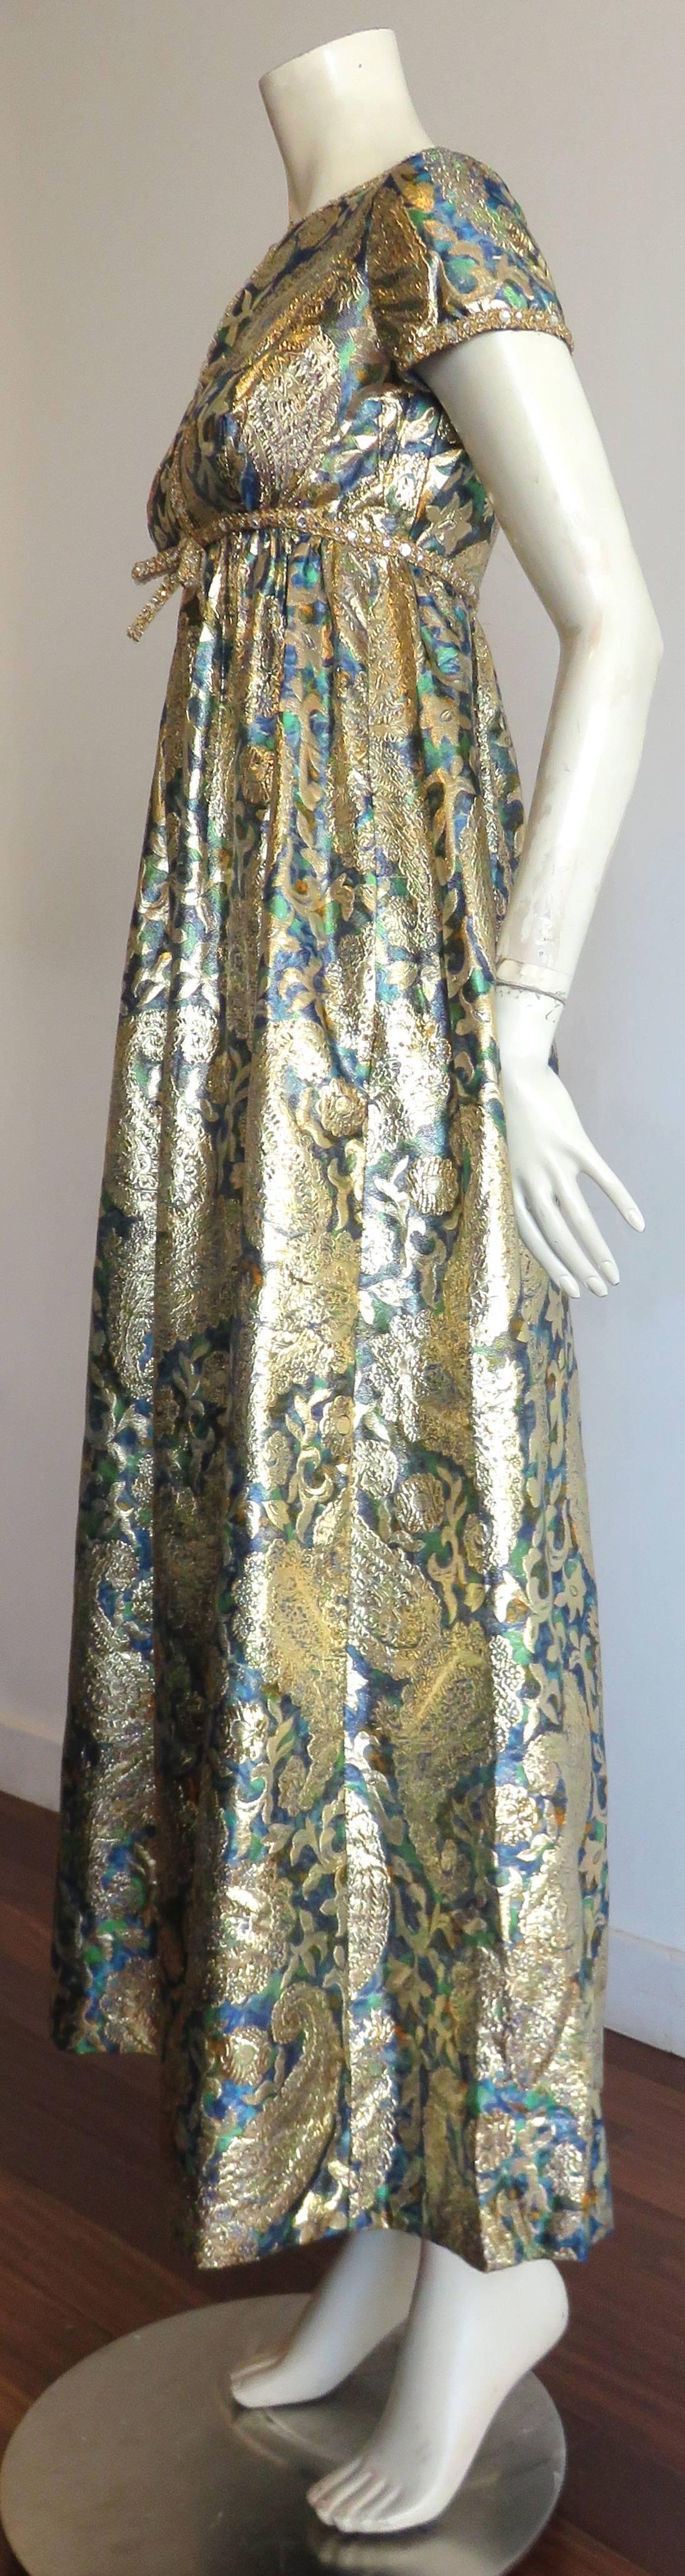 Women's 1960's MALCOLM STARR Colinda golden brocade evening gown dress